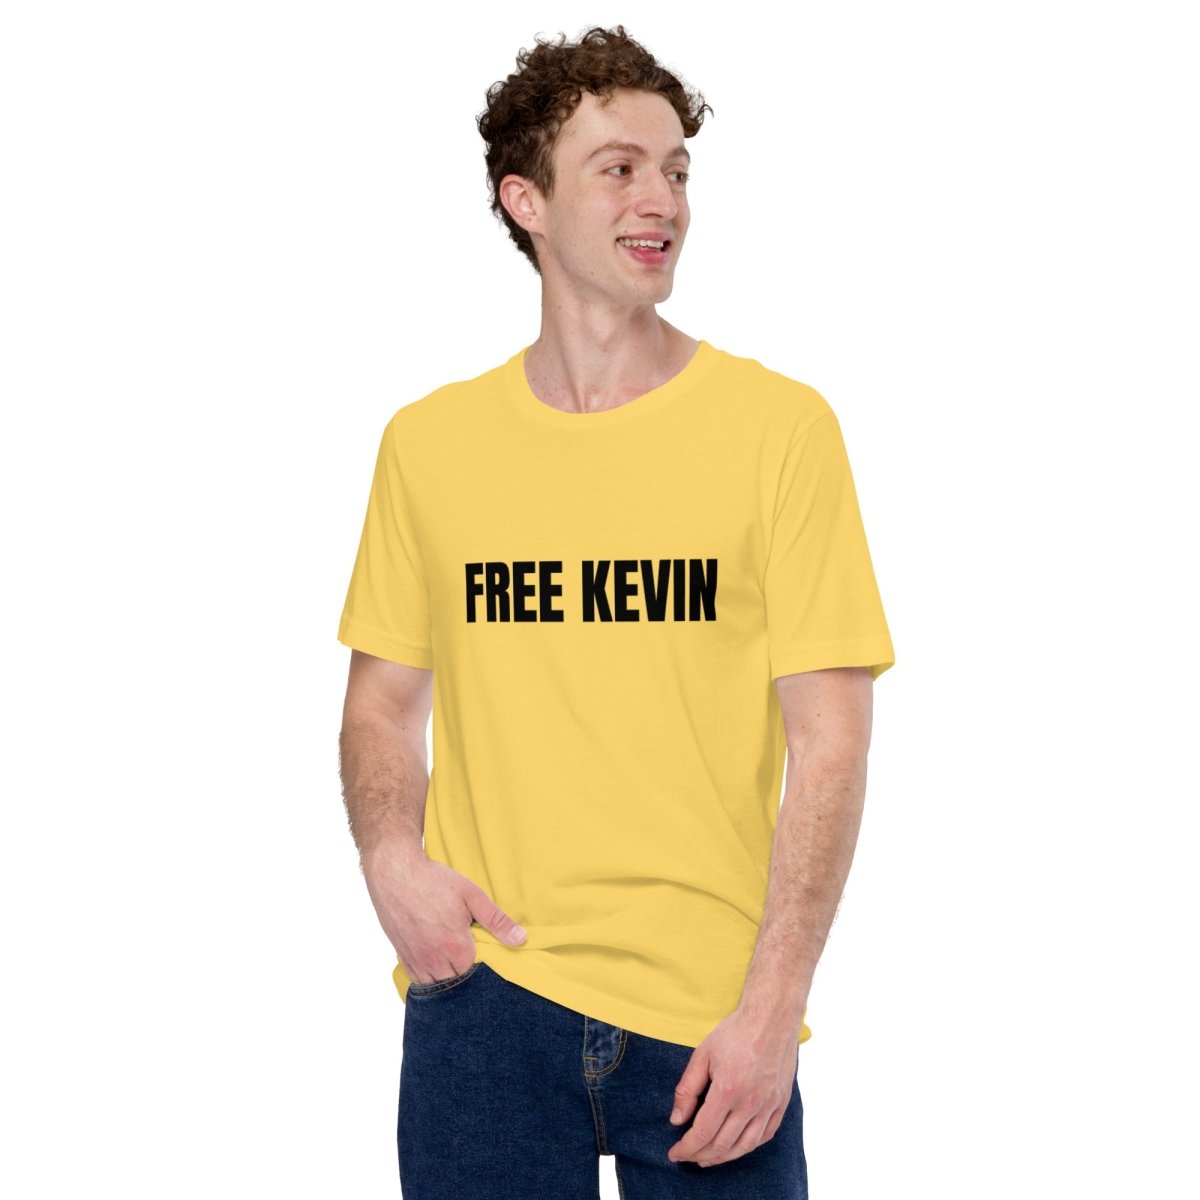 Free Kevin (Mitnick) T - Shirt (unisex) - S - AI Store